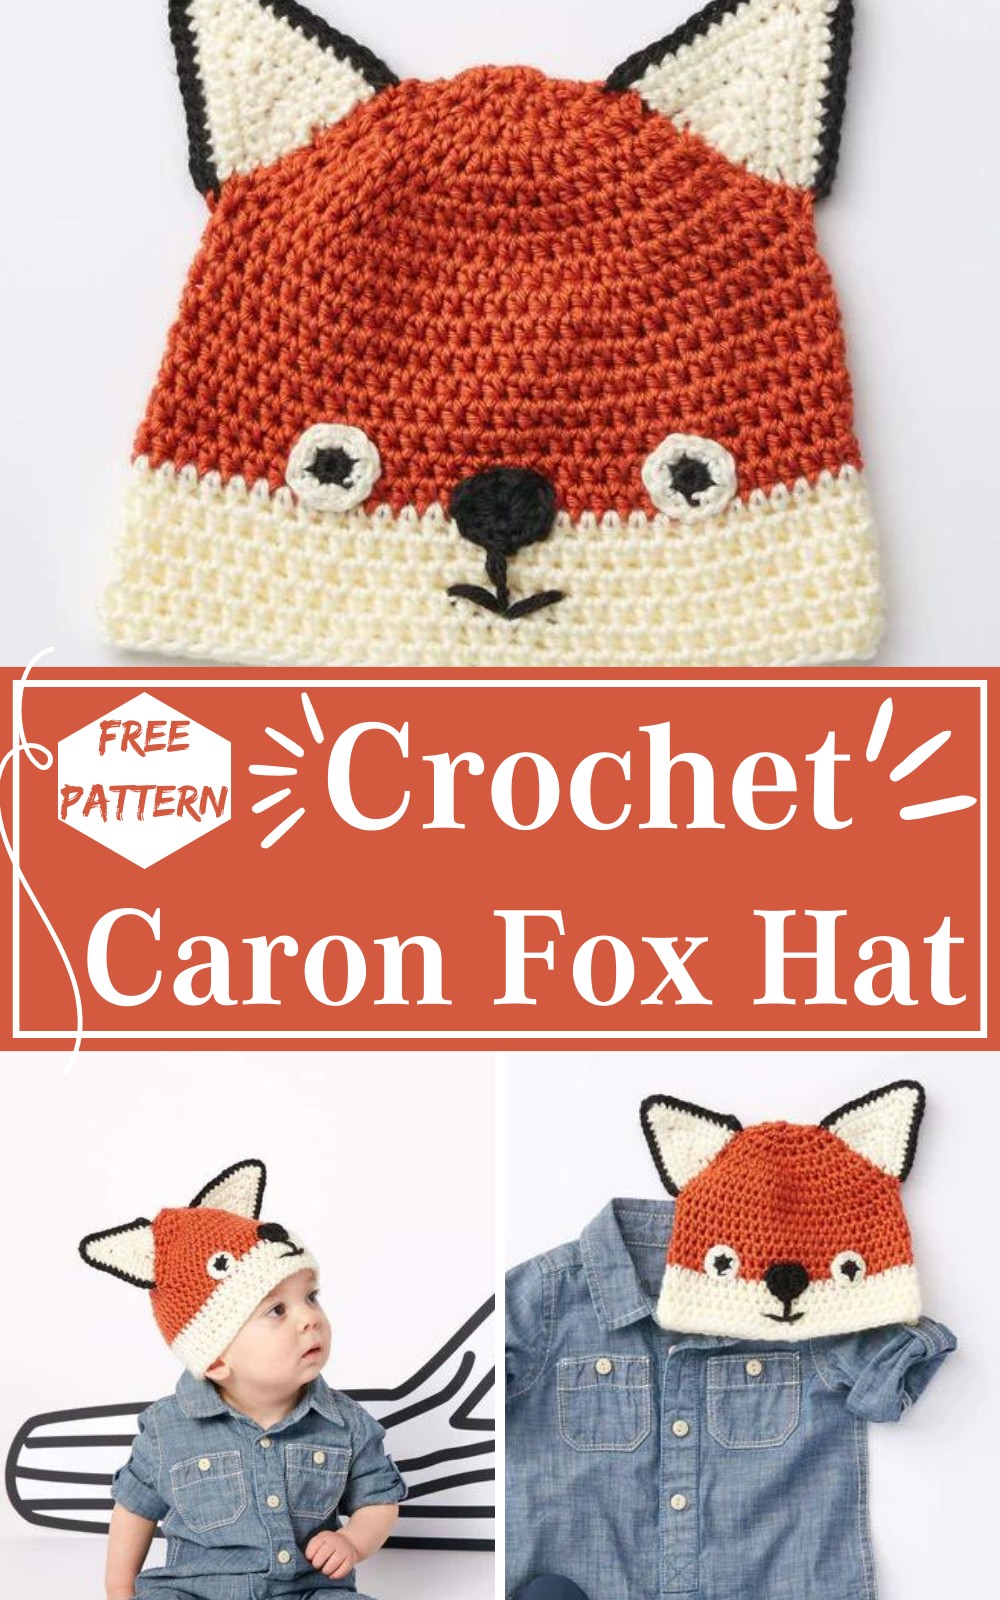 Crochet Caron Fox Hat